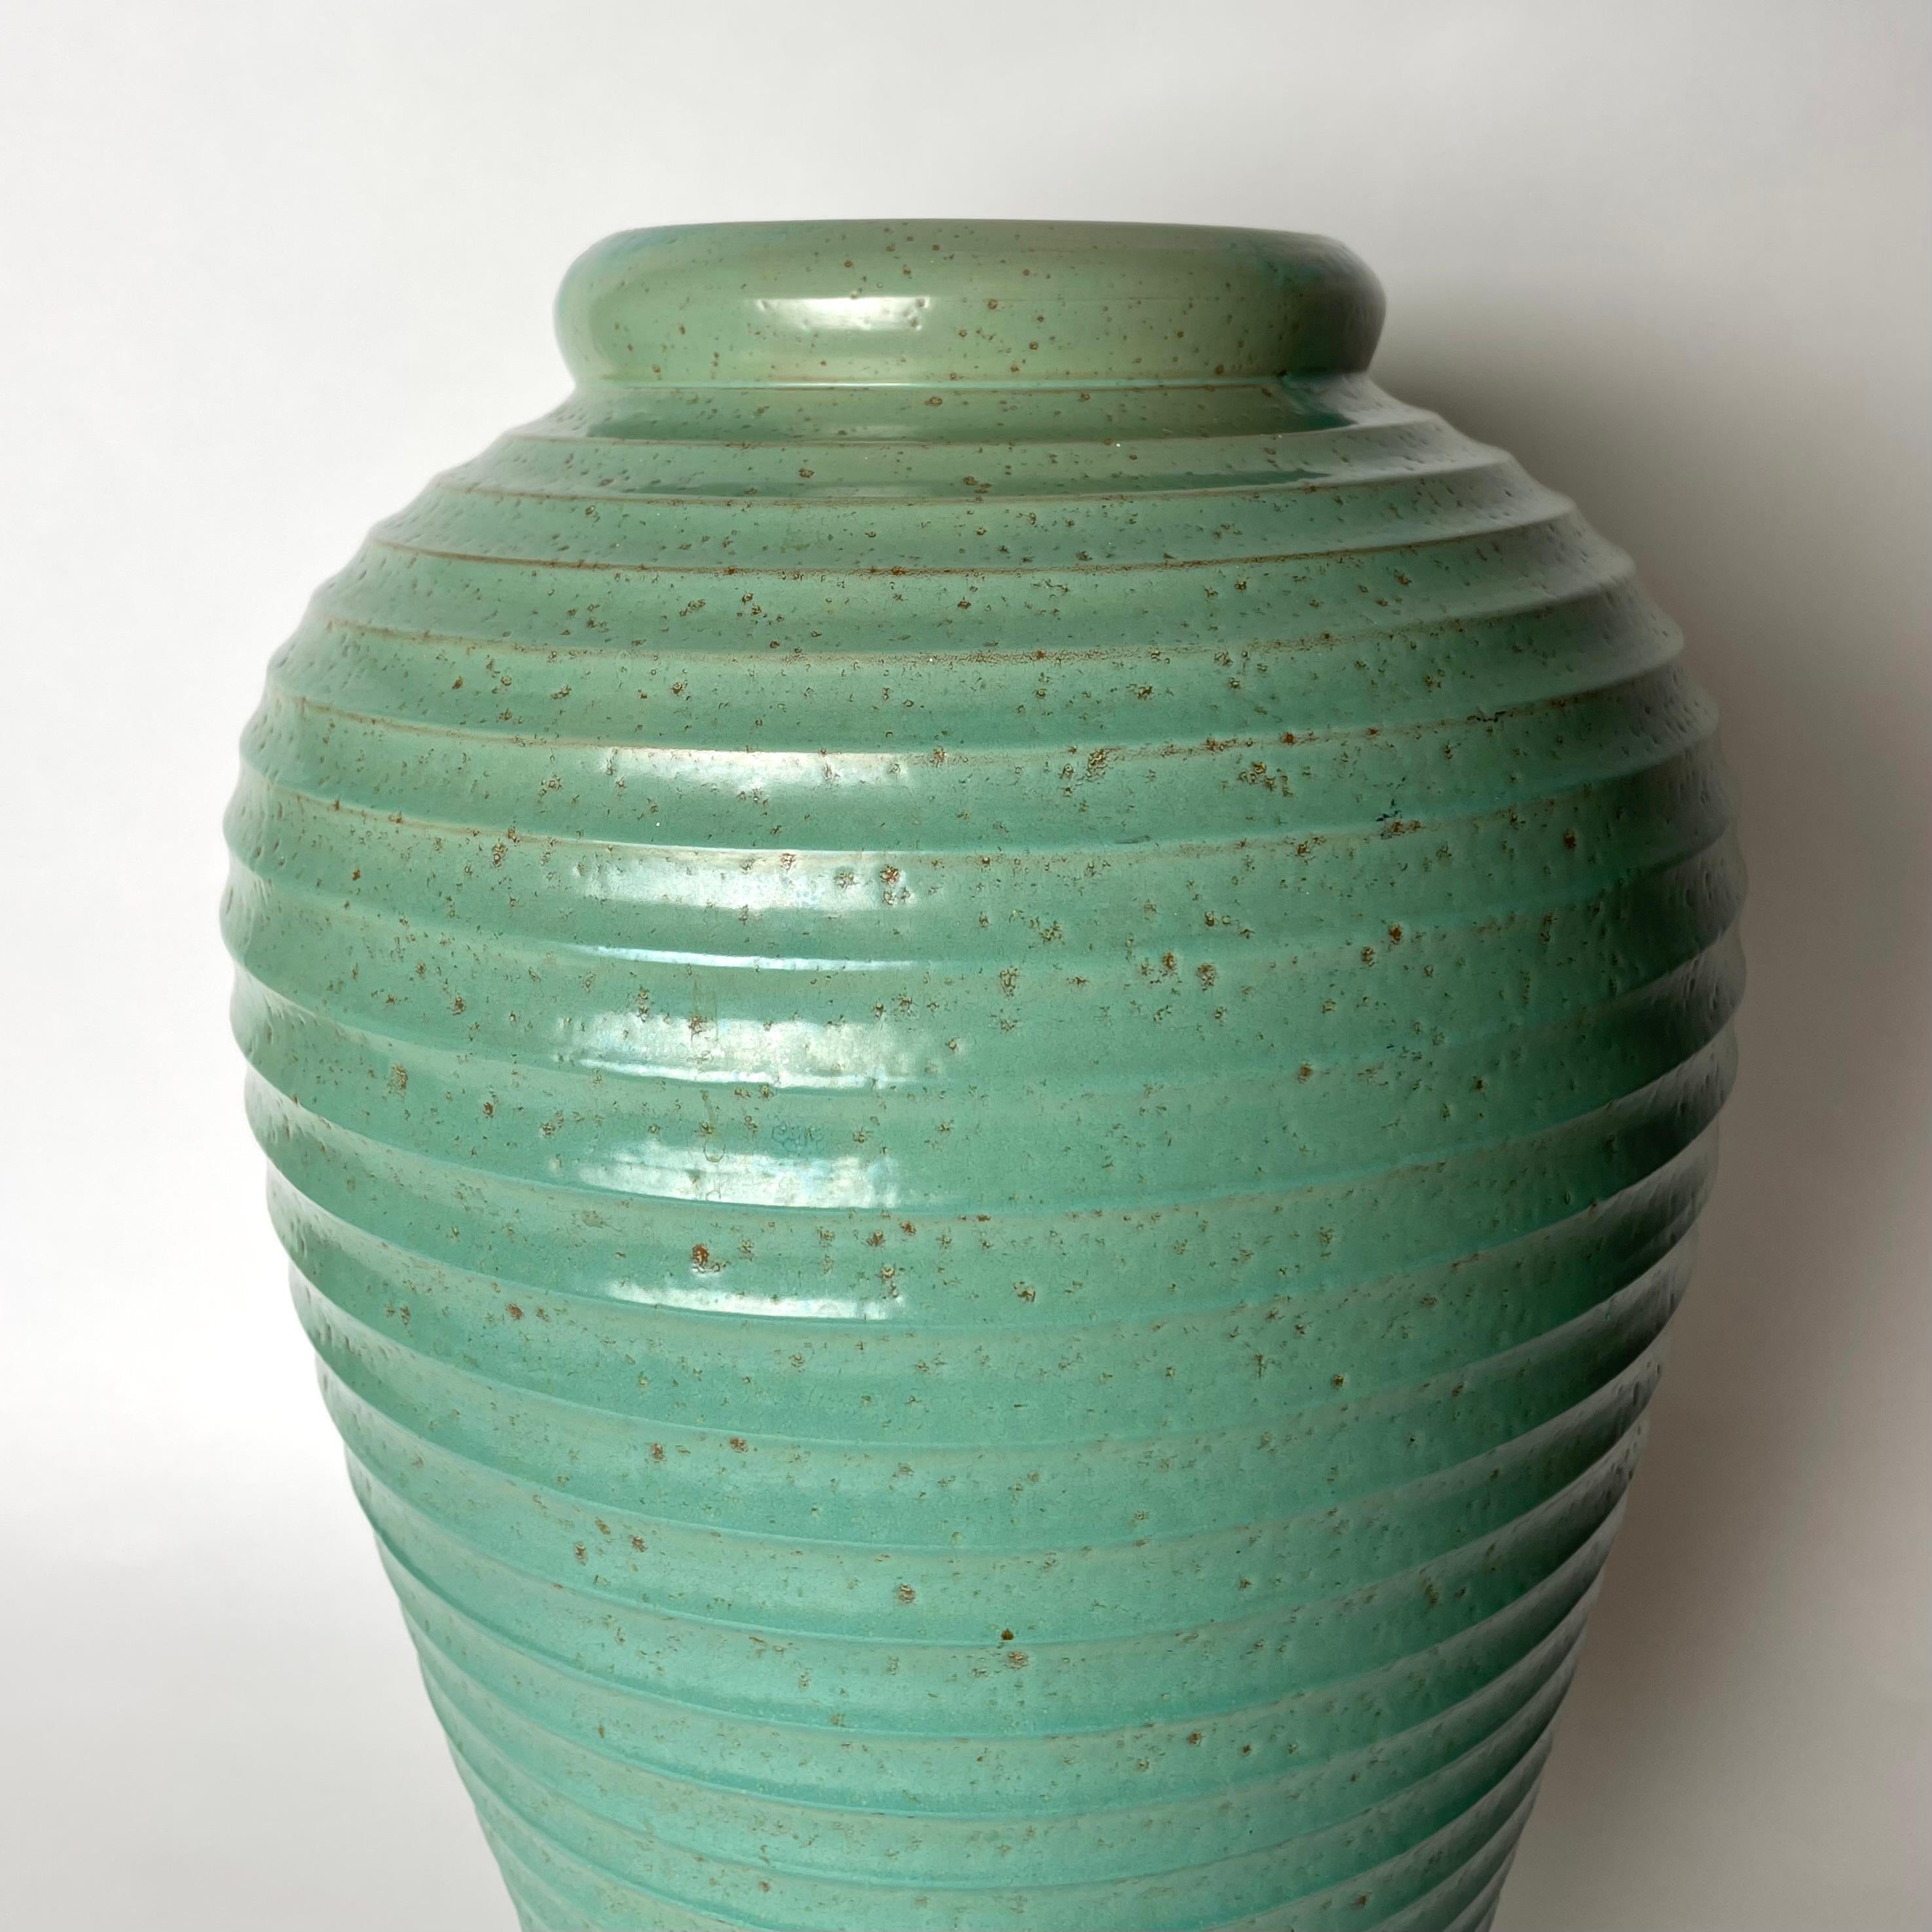 Elegance du vase de sol Art déco des années 1930 par Jerk Werkmäster, Nittsjö Keramik, Suède en vente 2